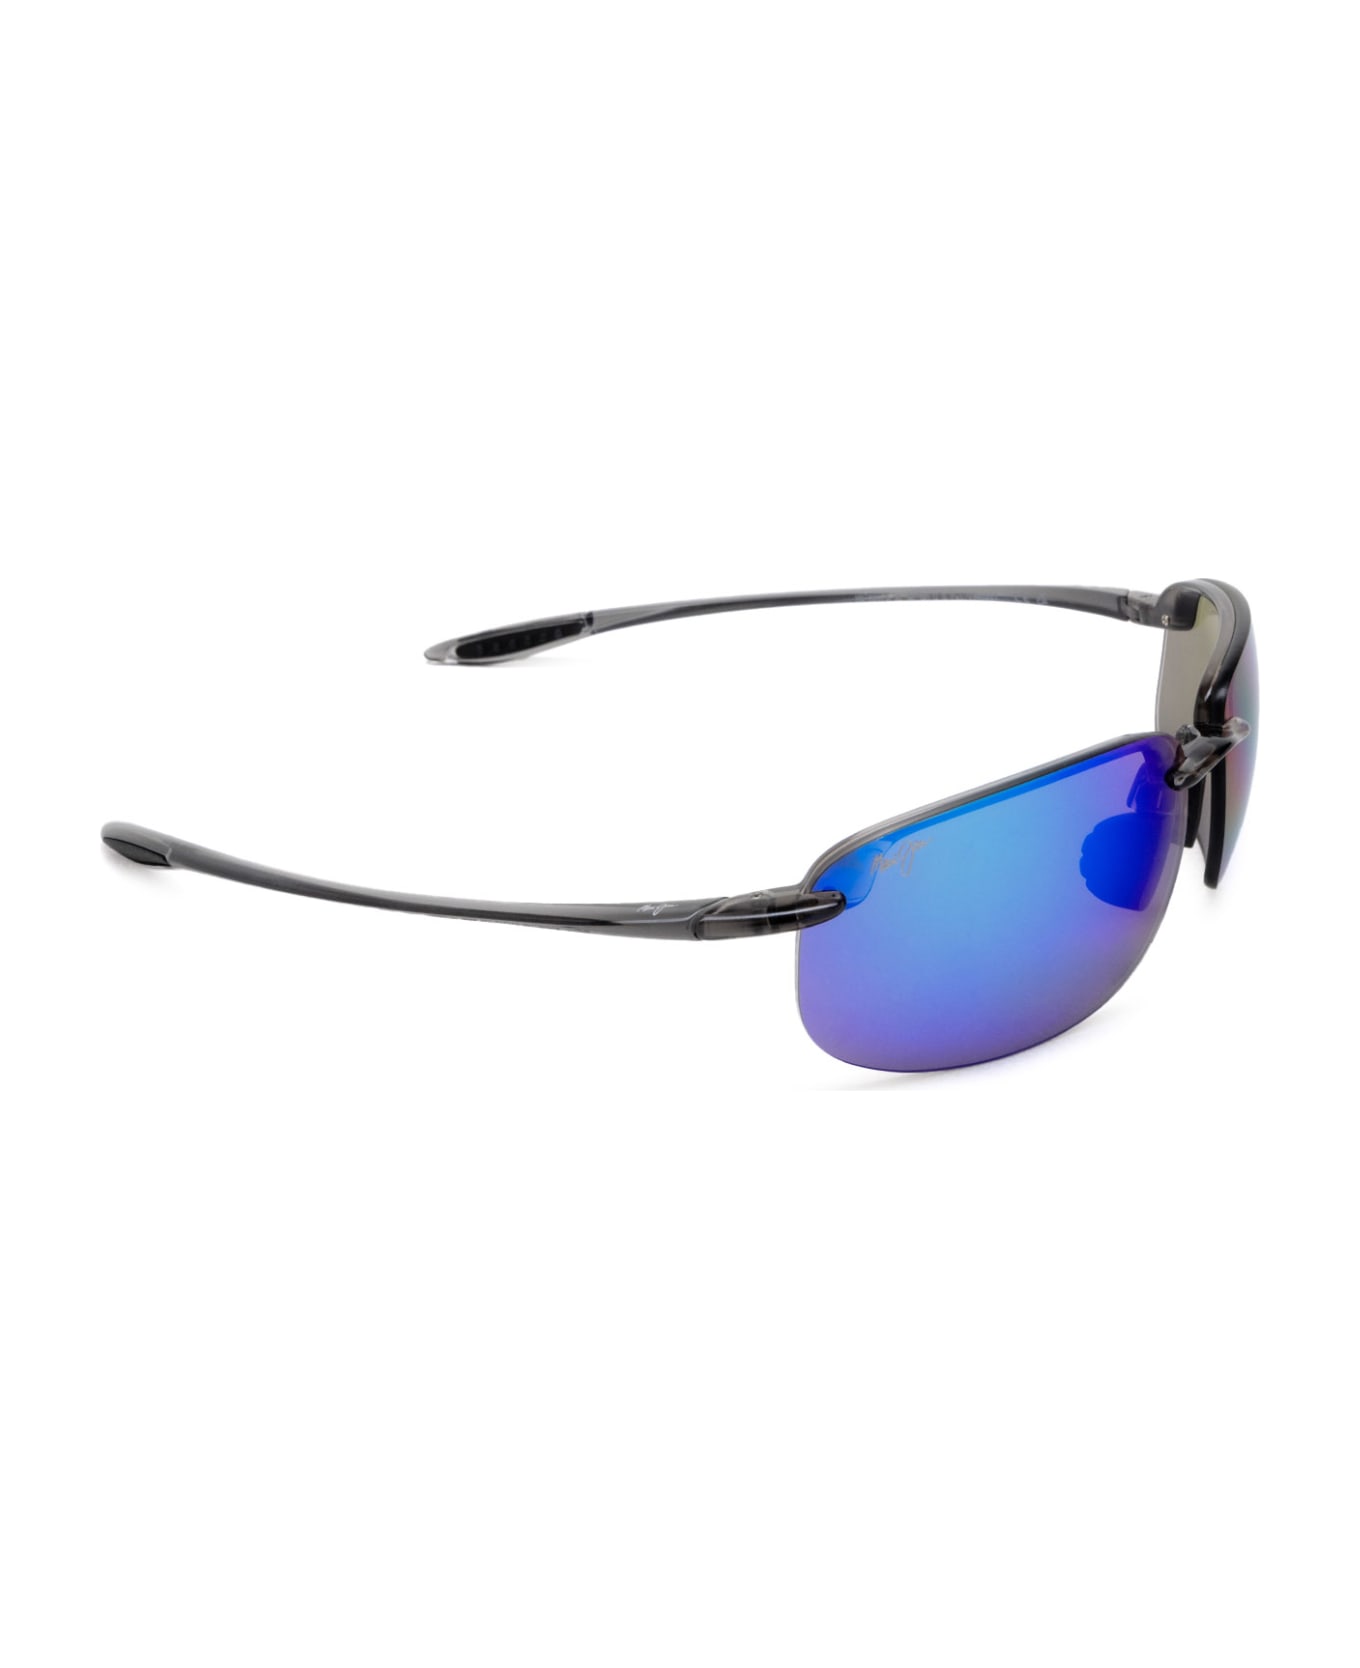 Maui Jim Mj456 Translucent Grey Sunglasses - Translucent Grey サングラス